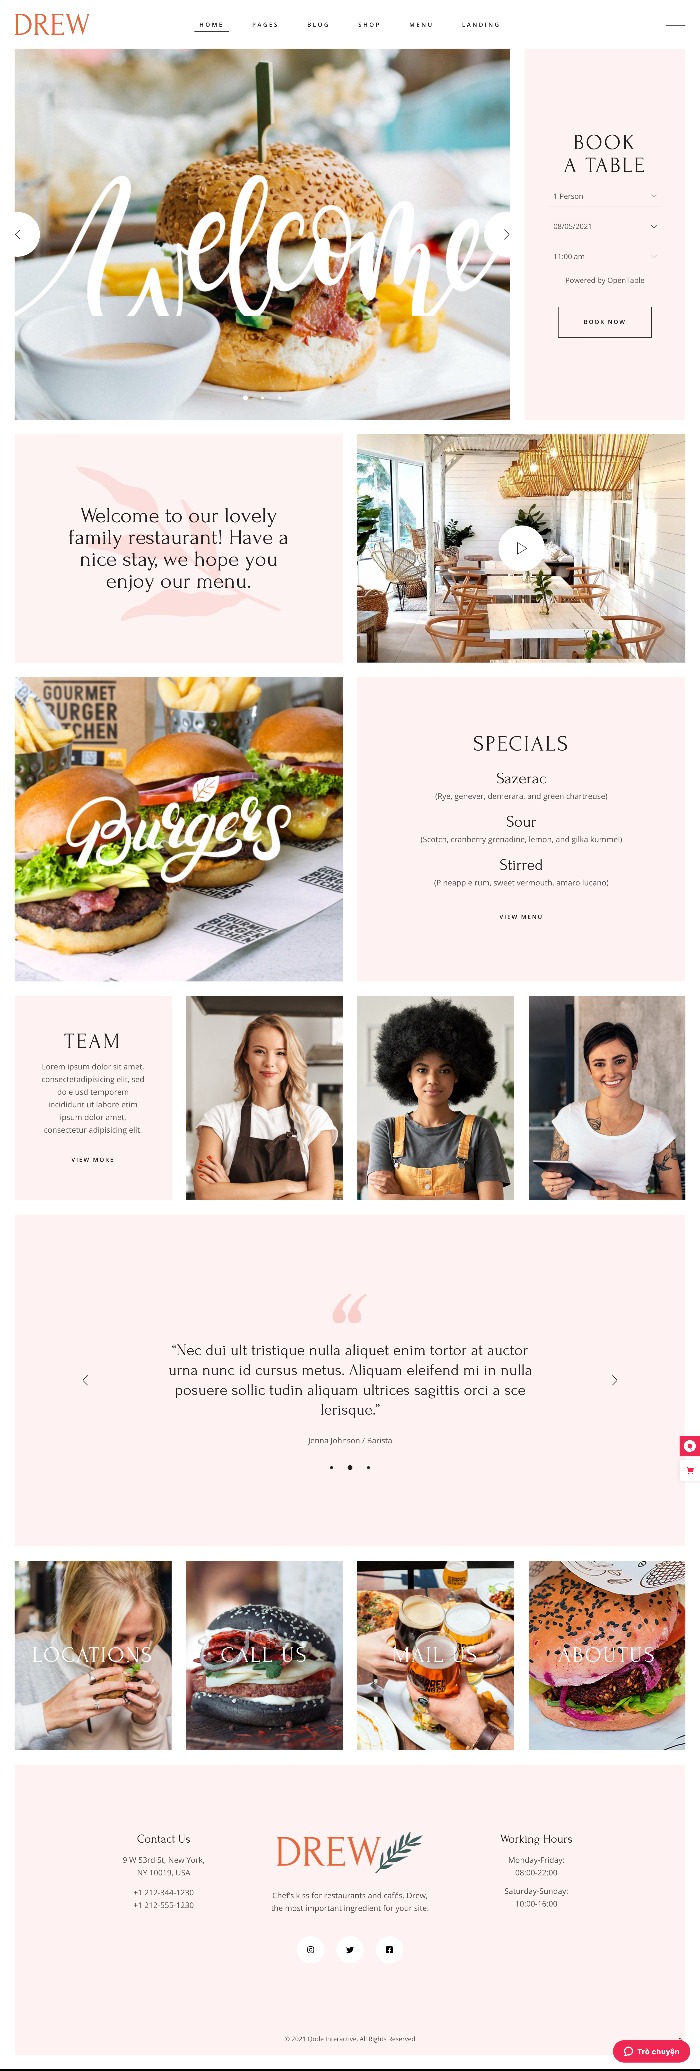 Mẫu Website Nhà Hàng Drew Burger Restaurant